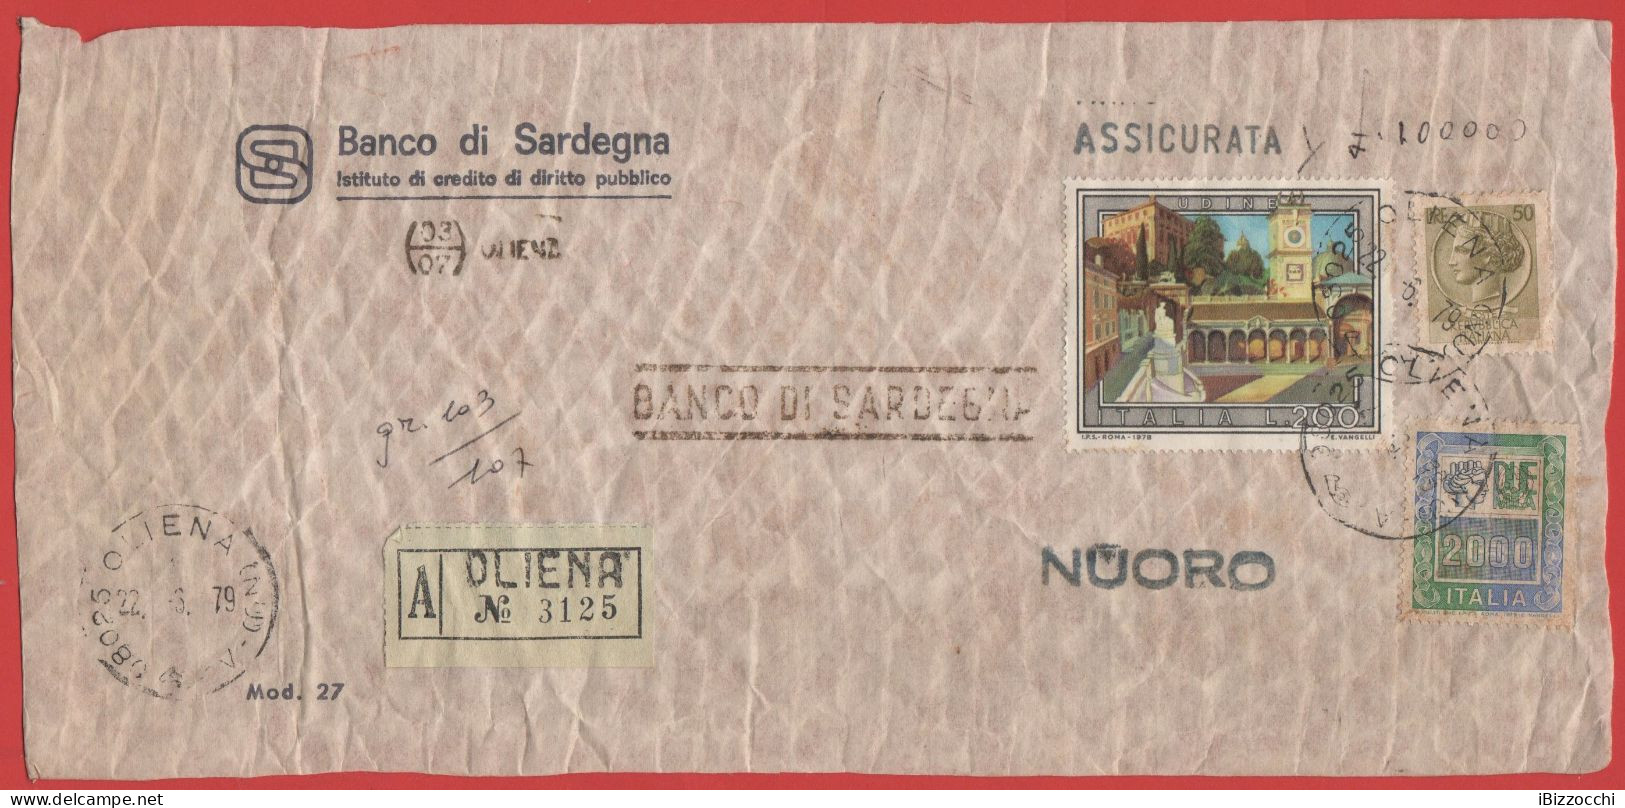 ITALIA - Storia Postale Repubblica - 1979 - 200 Turismo 5ª Emissione; Udine + 50 Antica Moneta Siracusana + 2000 Alti Va - 1981-90: Storia Postale